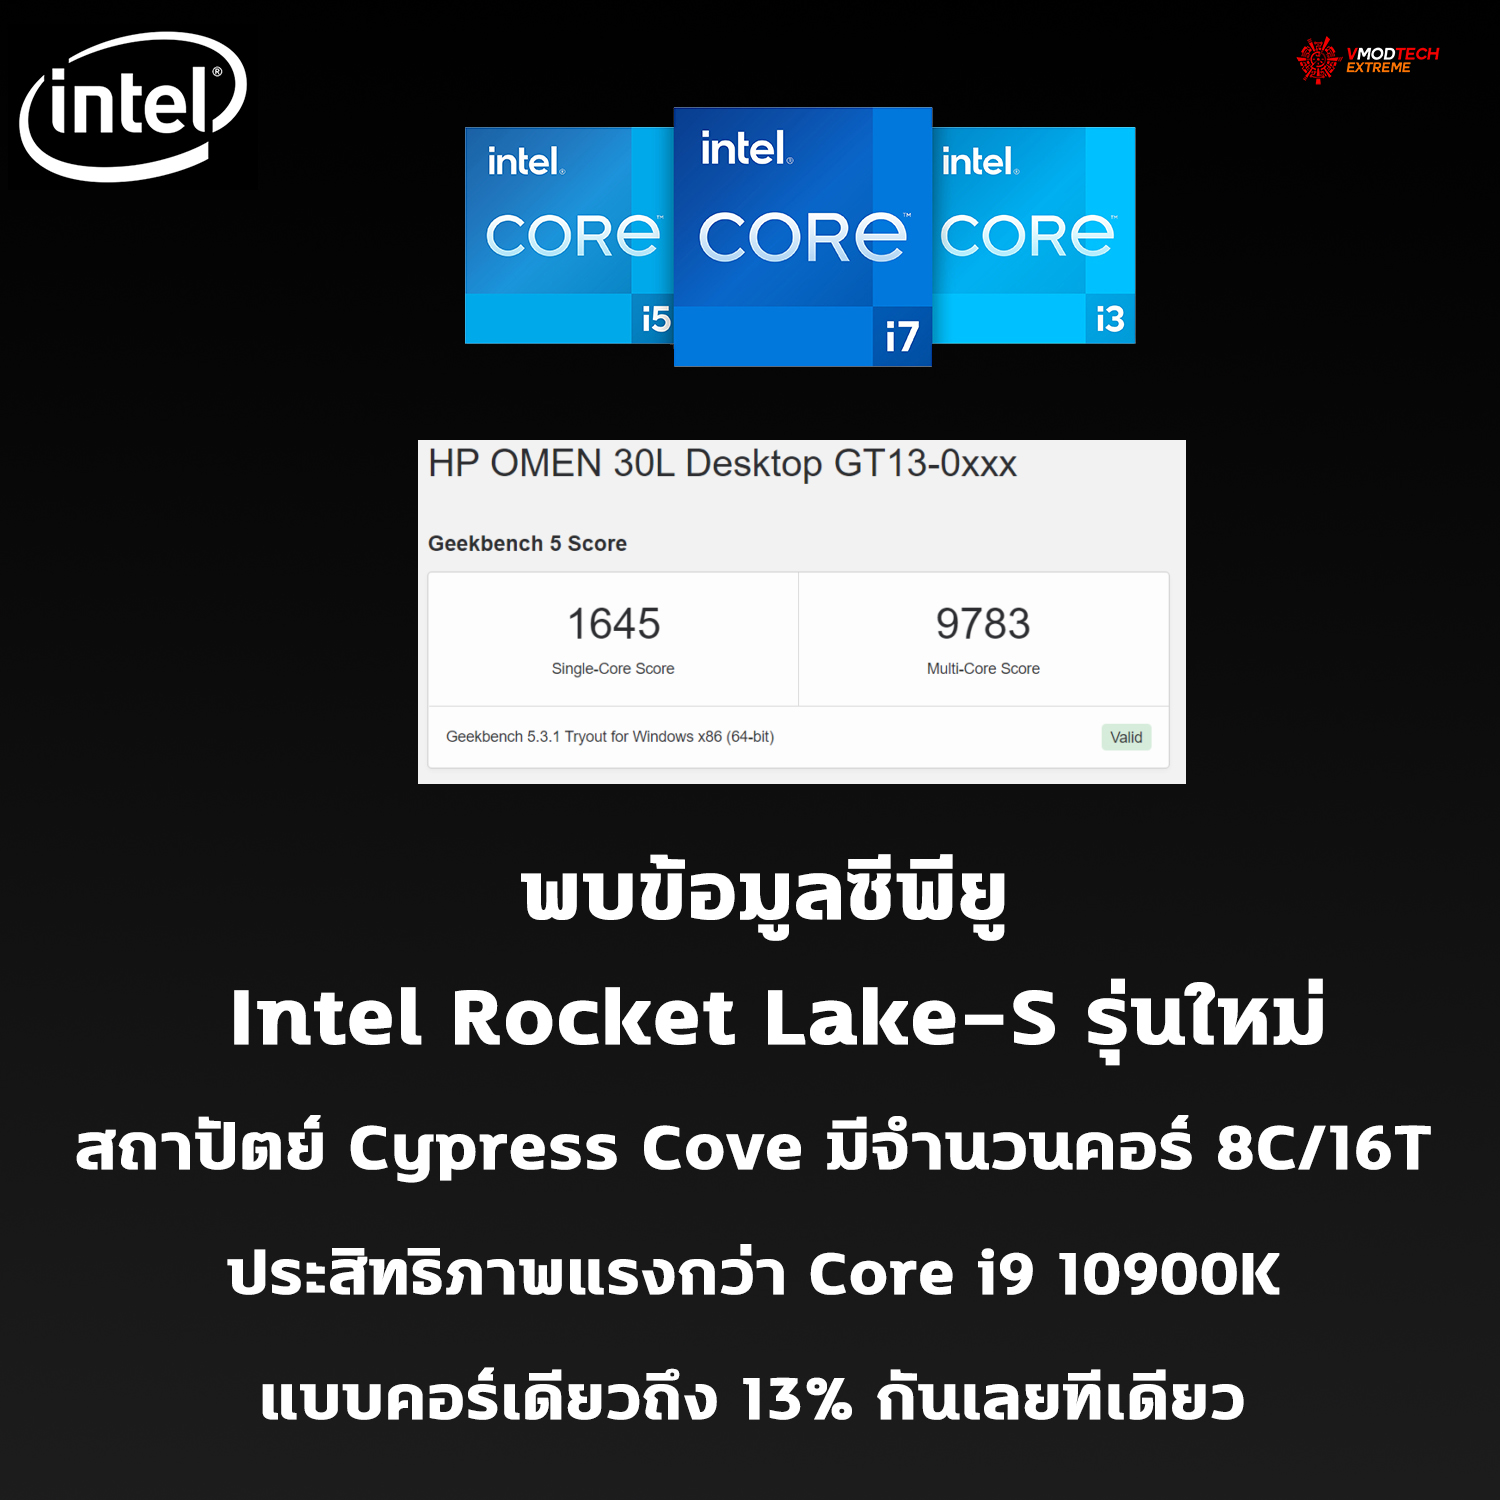 intel rocket lake s cypress cove พบข้อมูลซีพียู Intel Rocket Lake S รุ่นใหม่มีจำนวนคอร์ 8C/16T ประสิทธิภาพแรงกว่า Core i9 10900K แบบคอร์เดียวถึง 13% กันเลยทีเดียว 